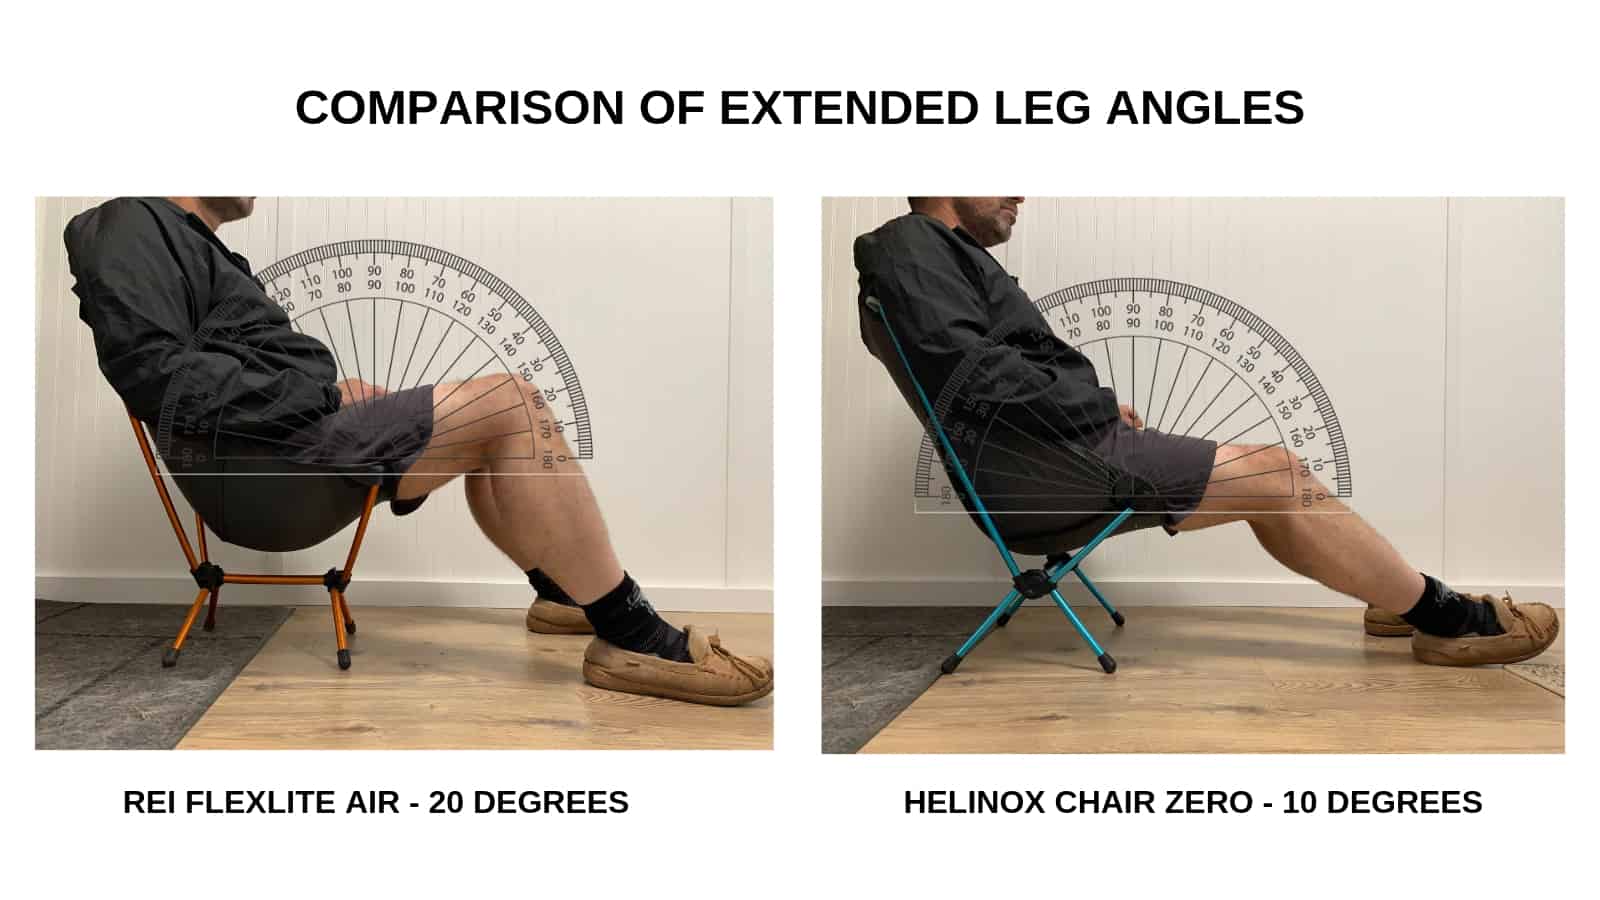 helinox chair zero vs rei flexlite air chair leg angle